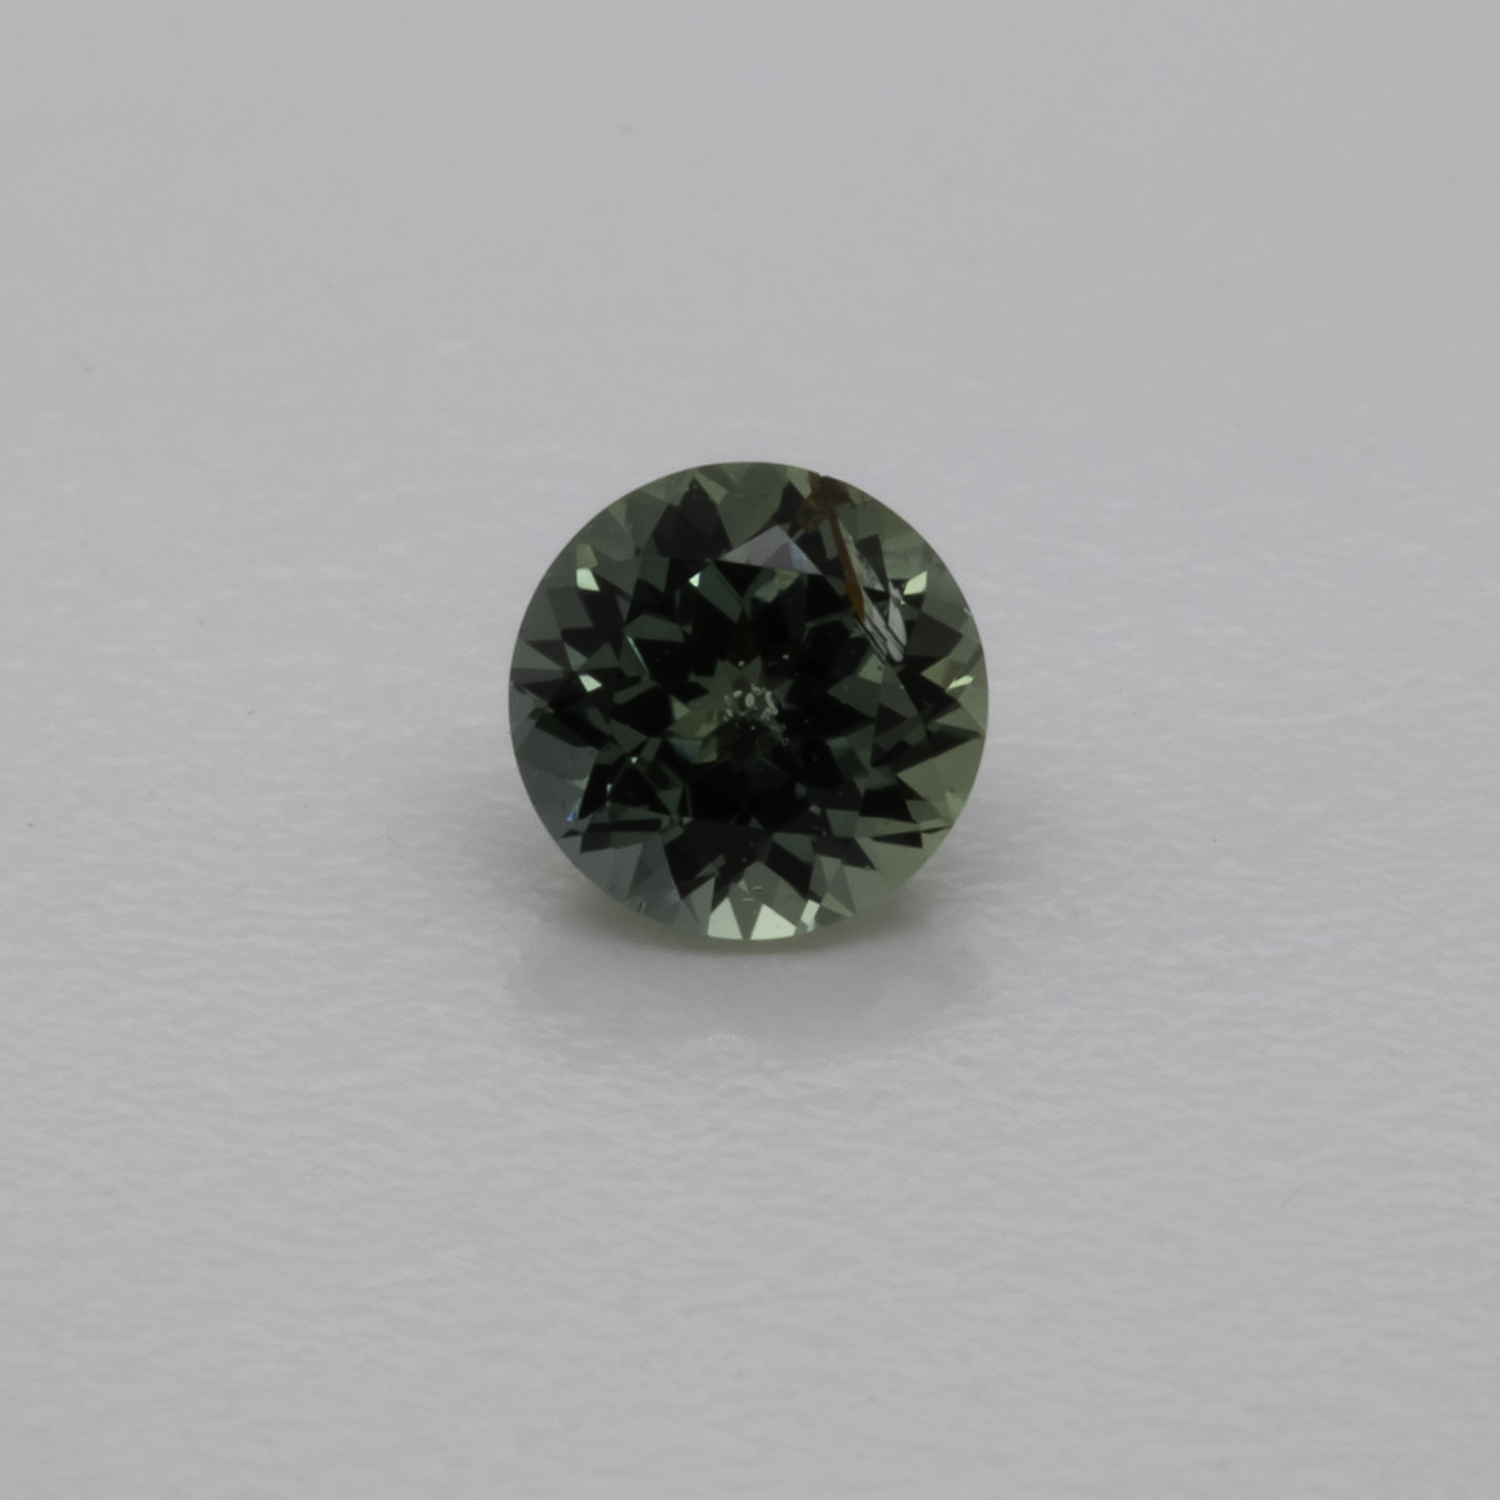 Sapphire - blue/green, round, 4.1x4.1 mm, 0.33 cts, No. XSR11209